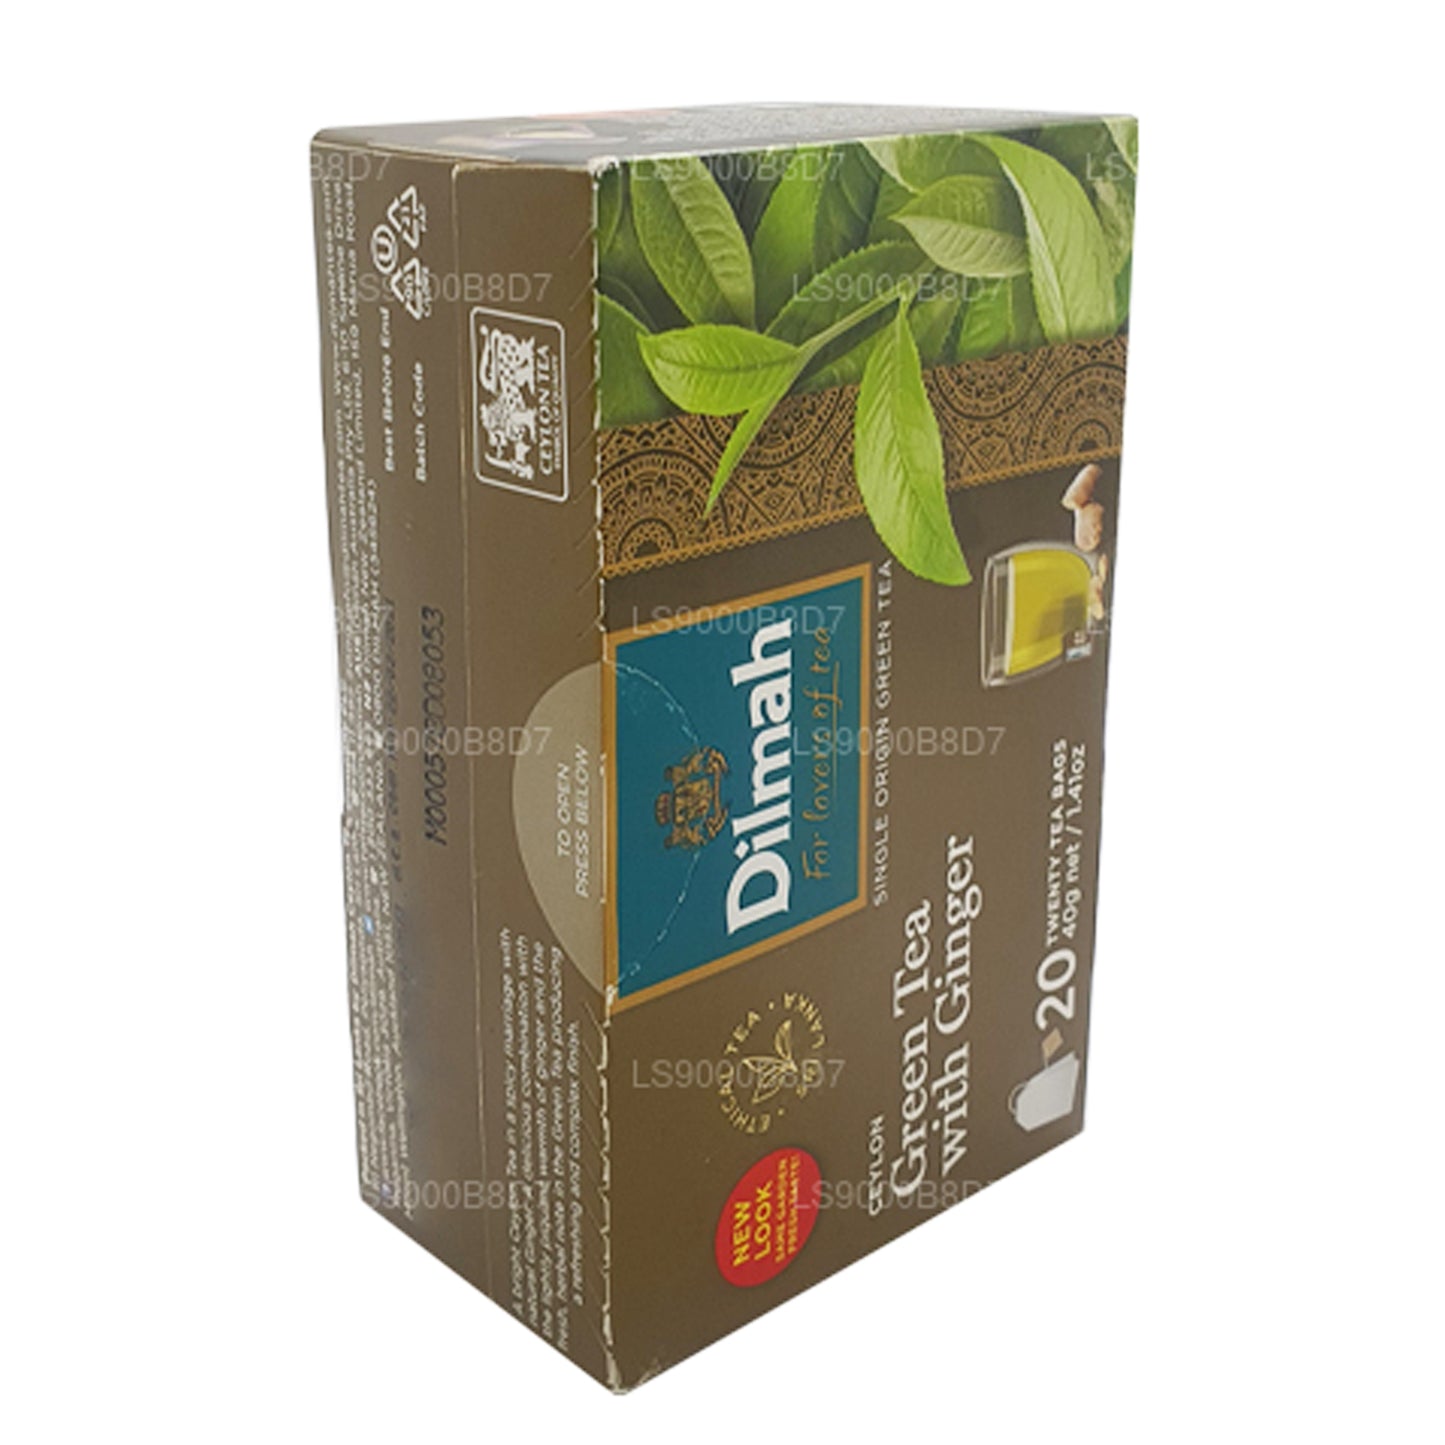 Dilmah Green Tea With Ginger (40g) 20 Tea Bags